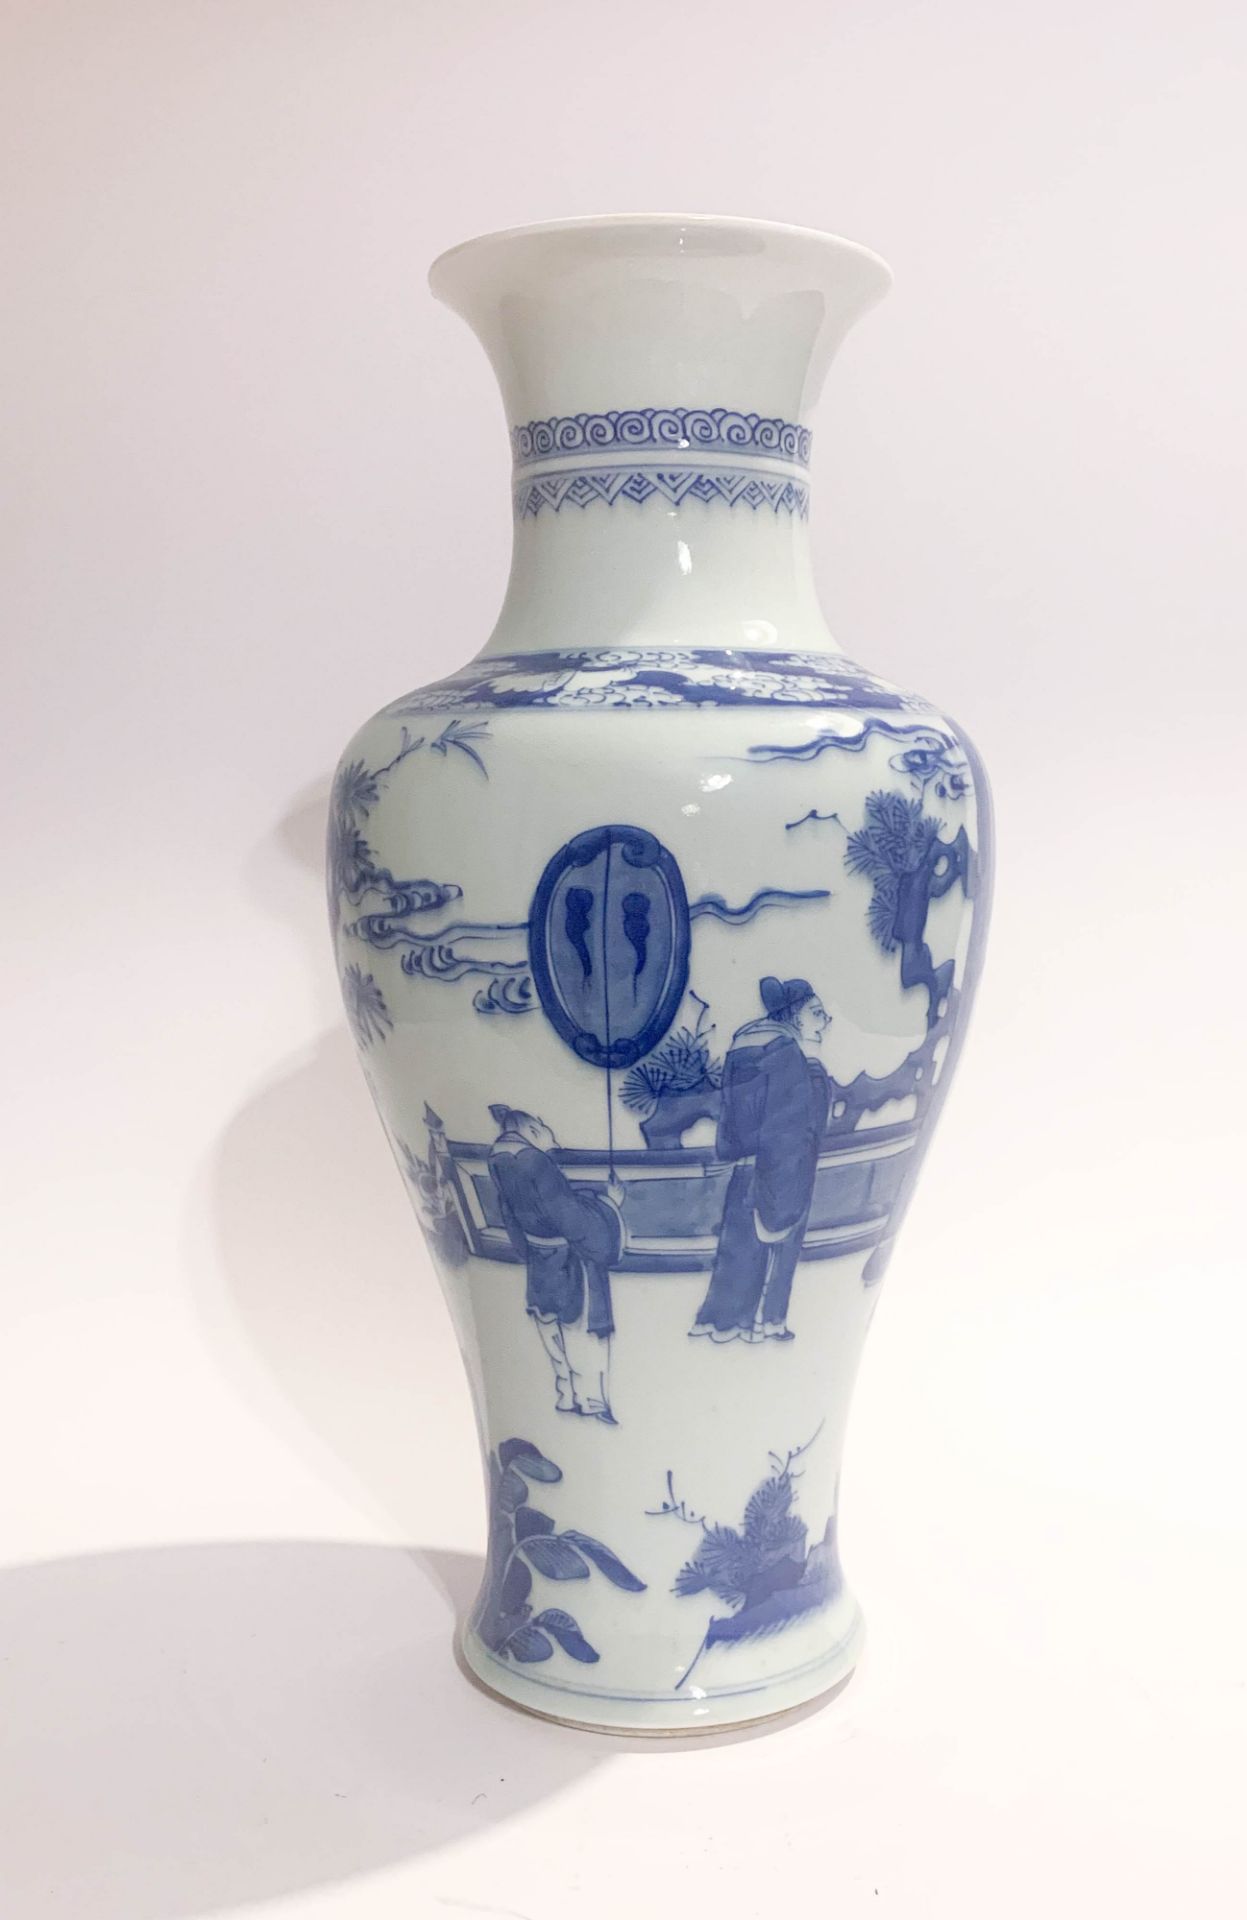  Floor vase China Qing dynasty 19th century - Image 3 of 11